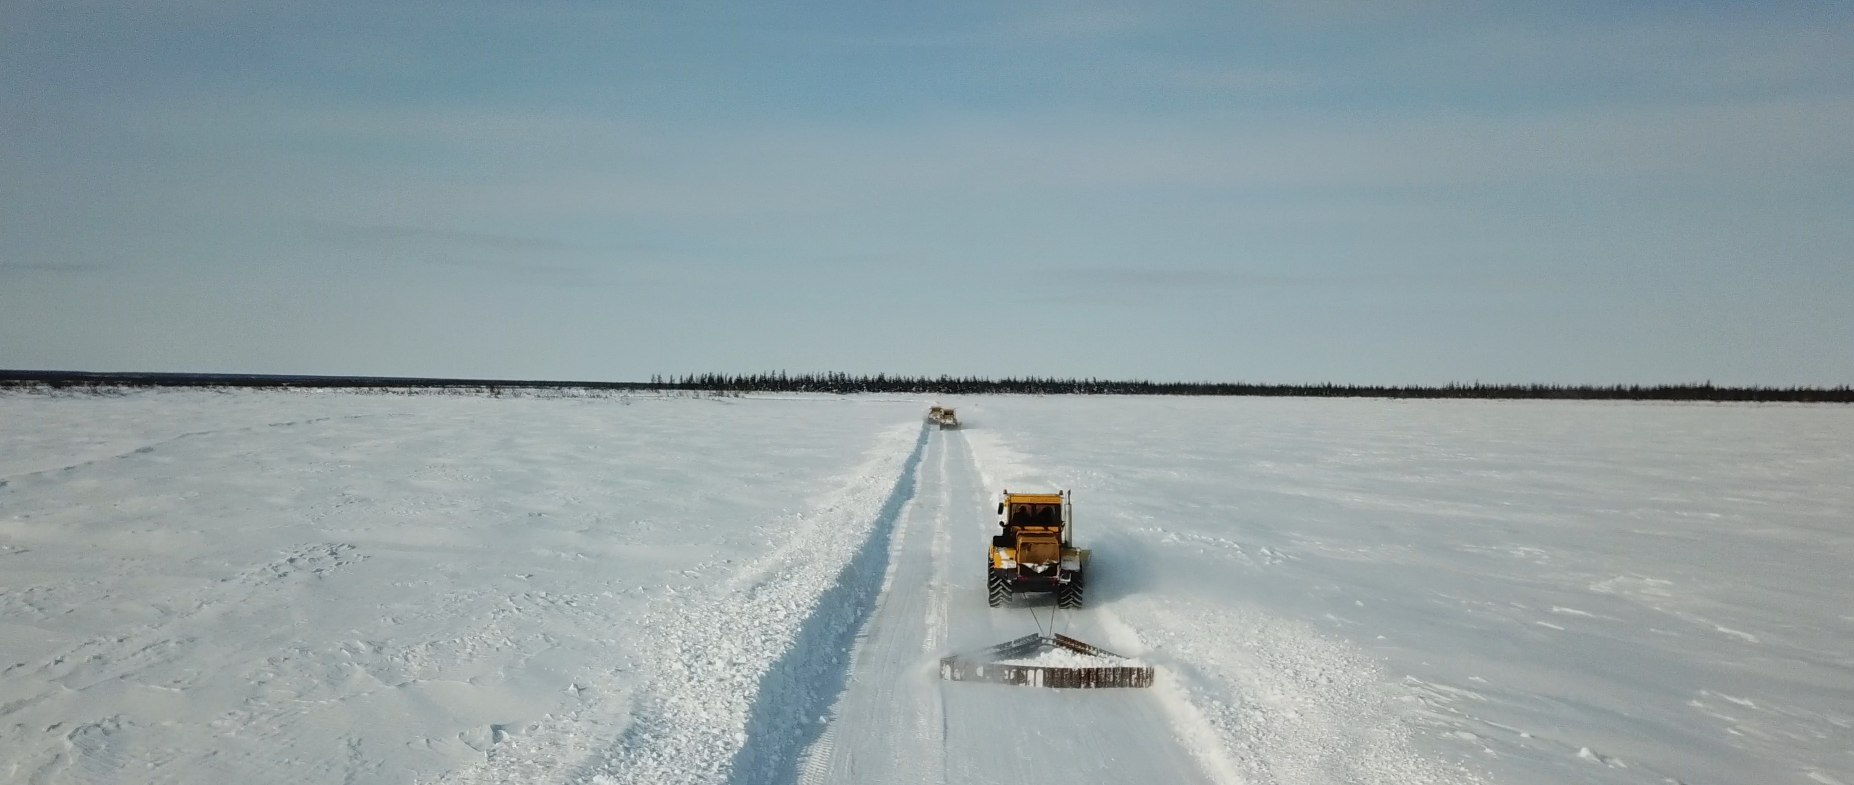 Грузоподъемность увеличили на автодороге «Арктика» в Якутии